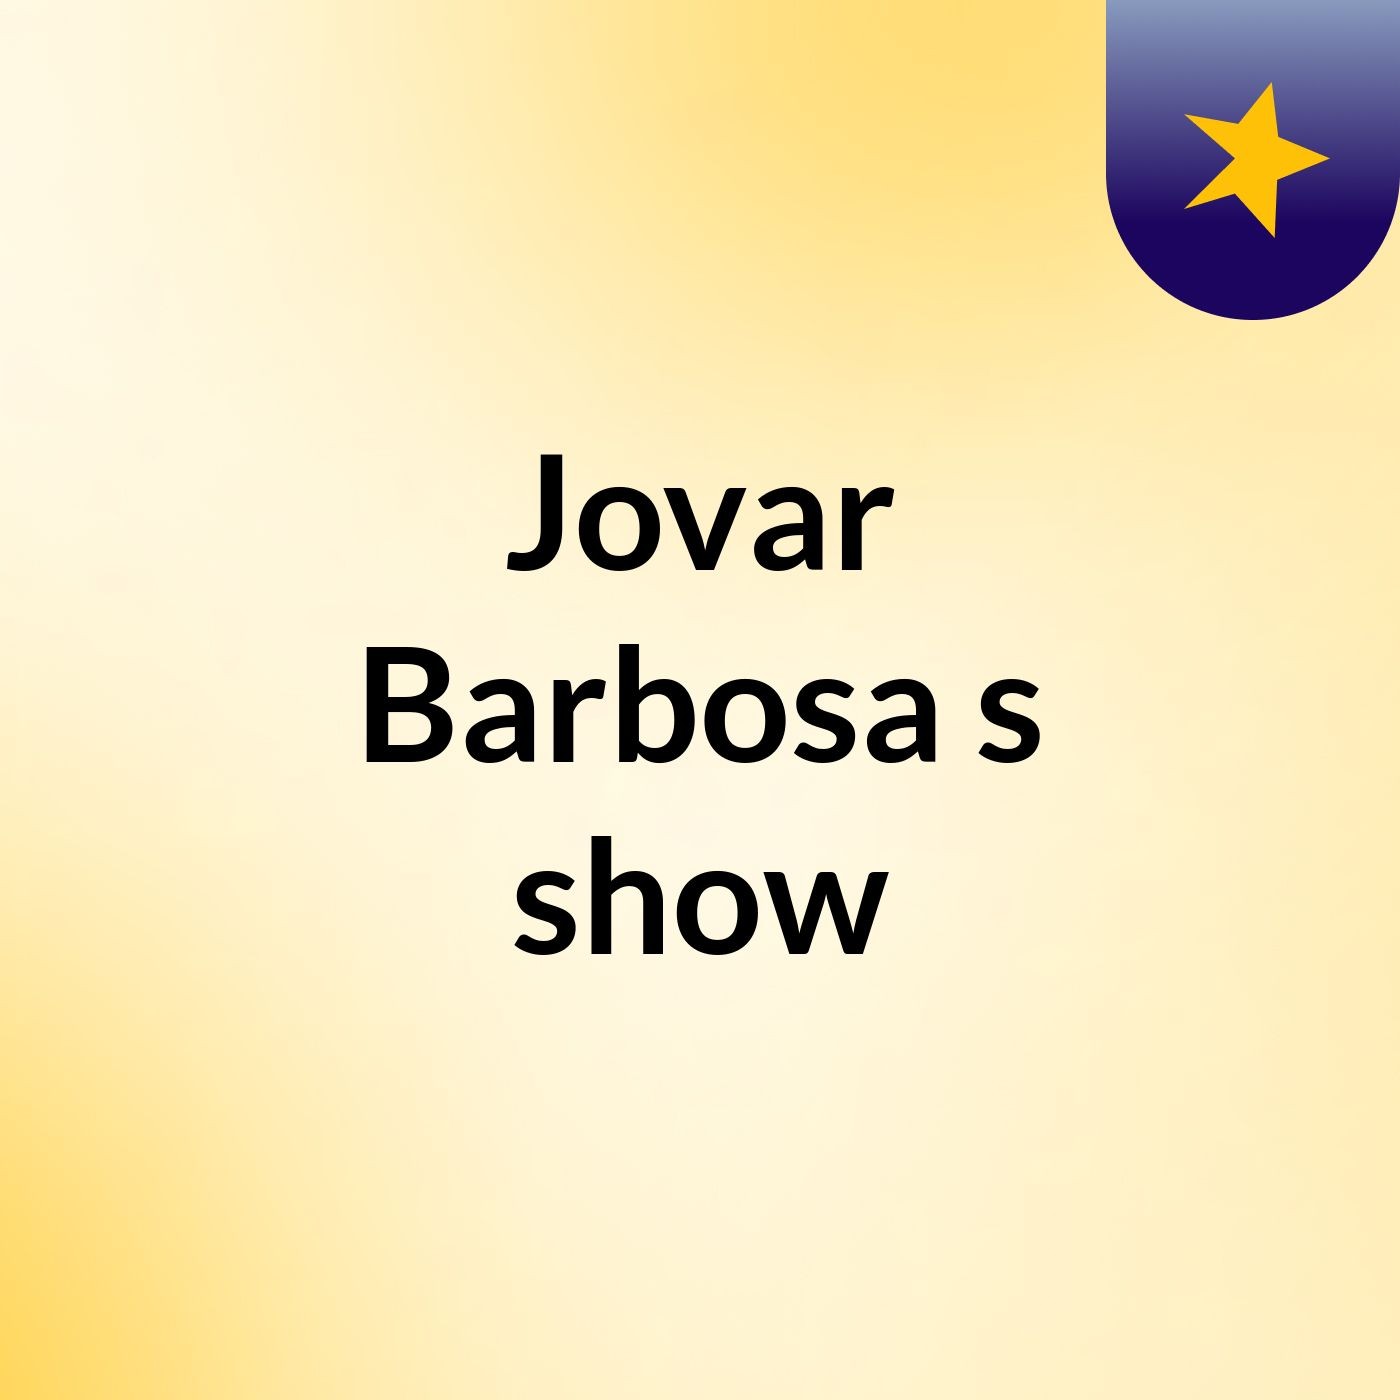 Jovar Barbosa's show